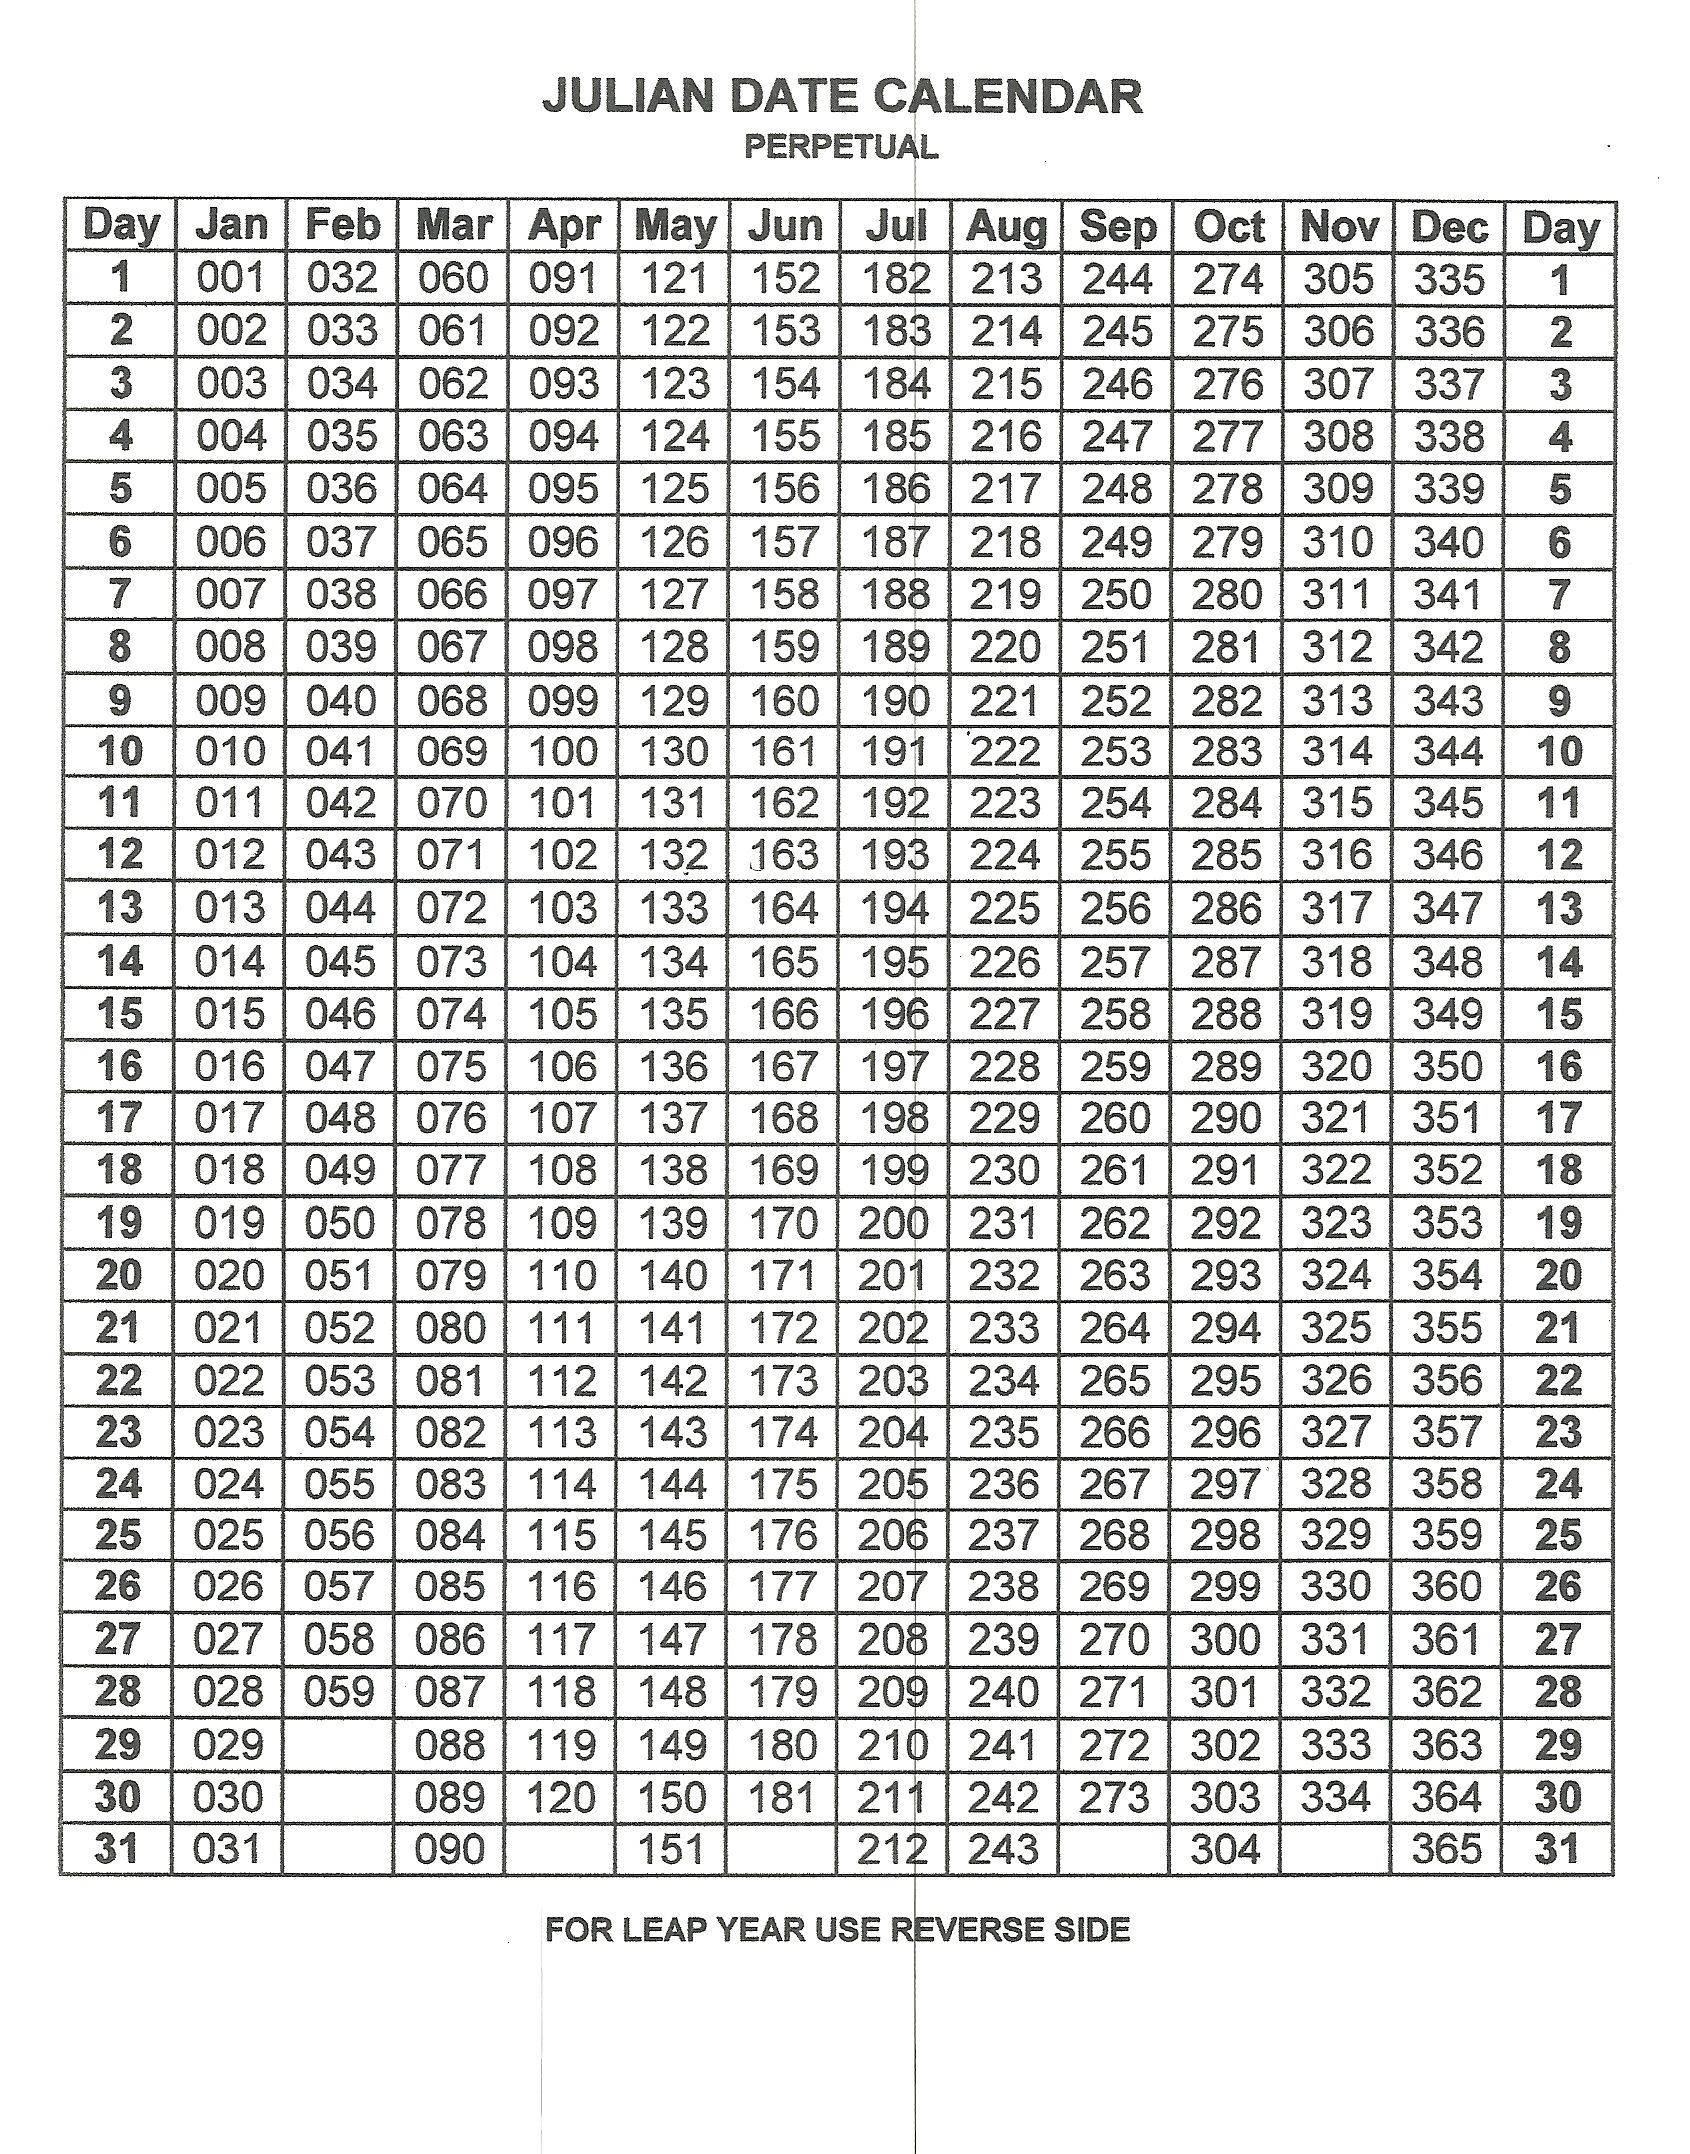 Perpetual Julian Date Calendar | Calendar, 2019 Calendar